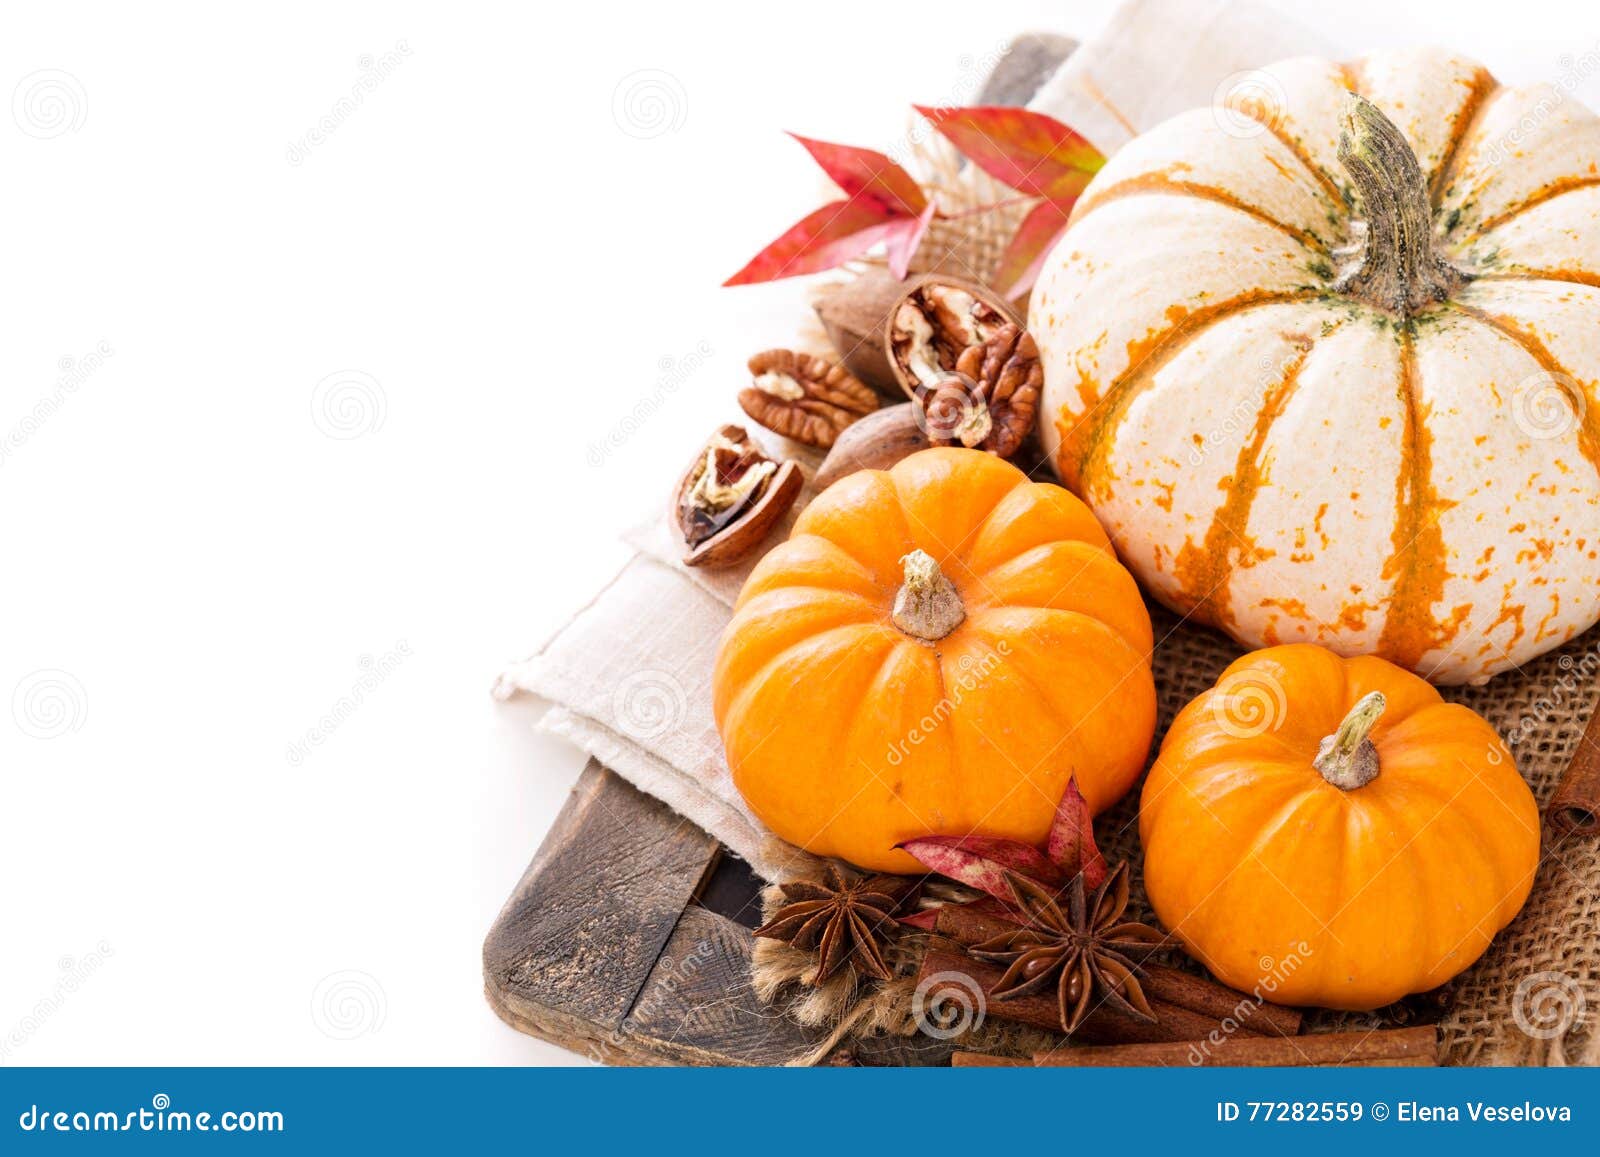 Variety of Decorative Pumpkins on White Background Stock Image - Image ...